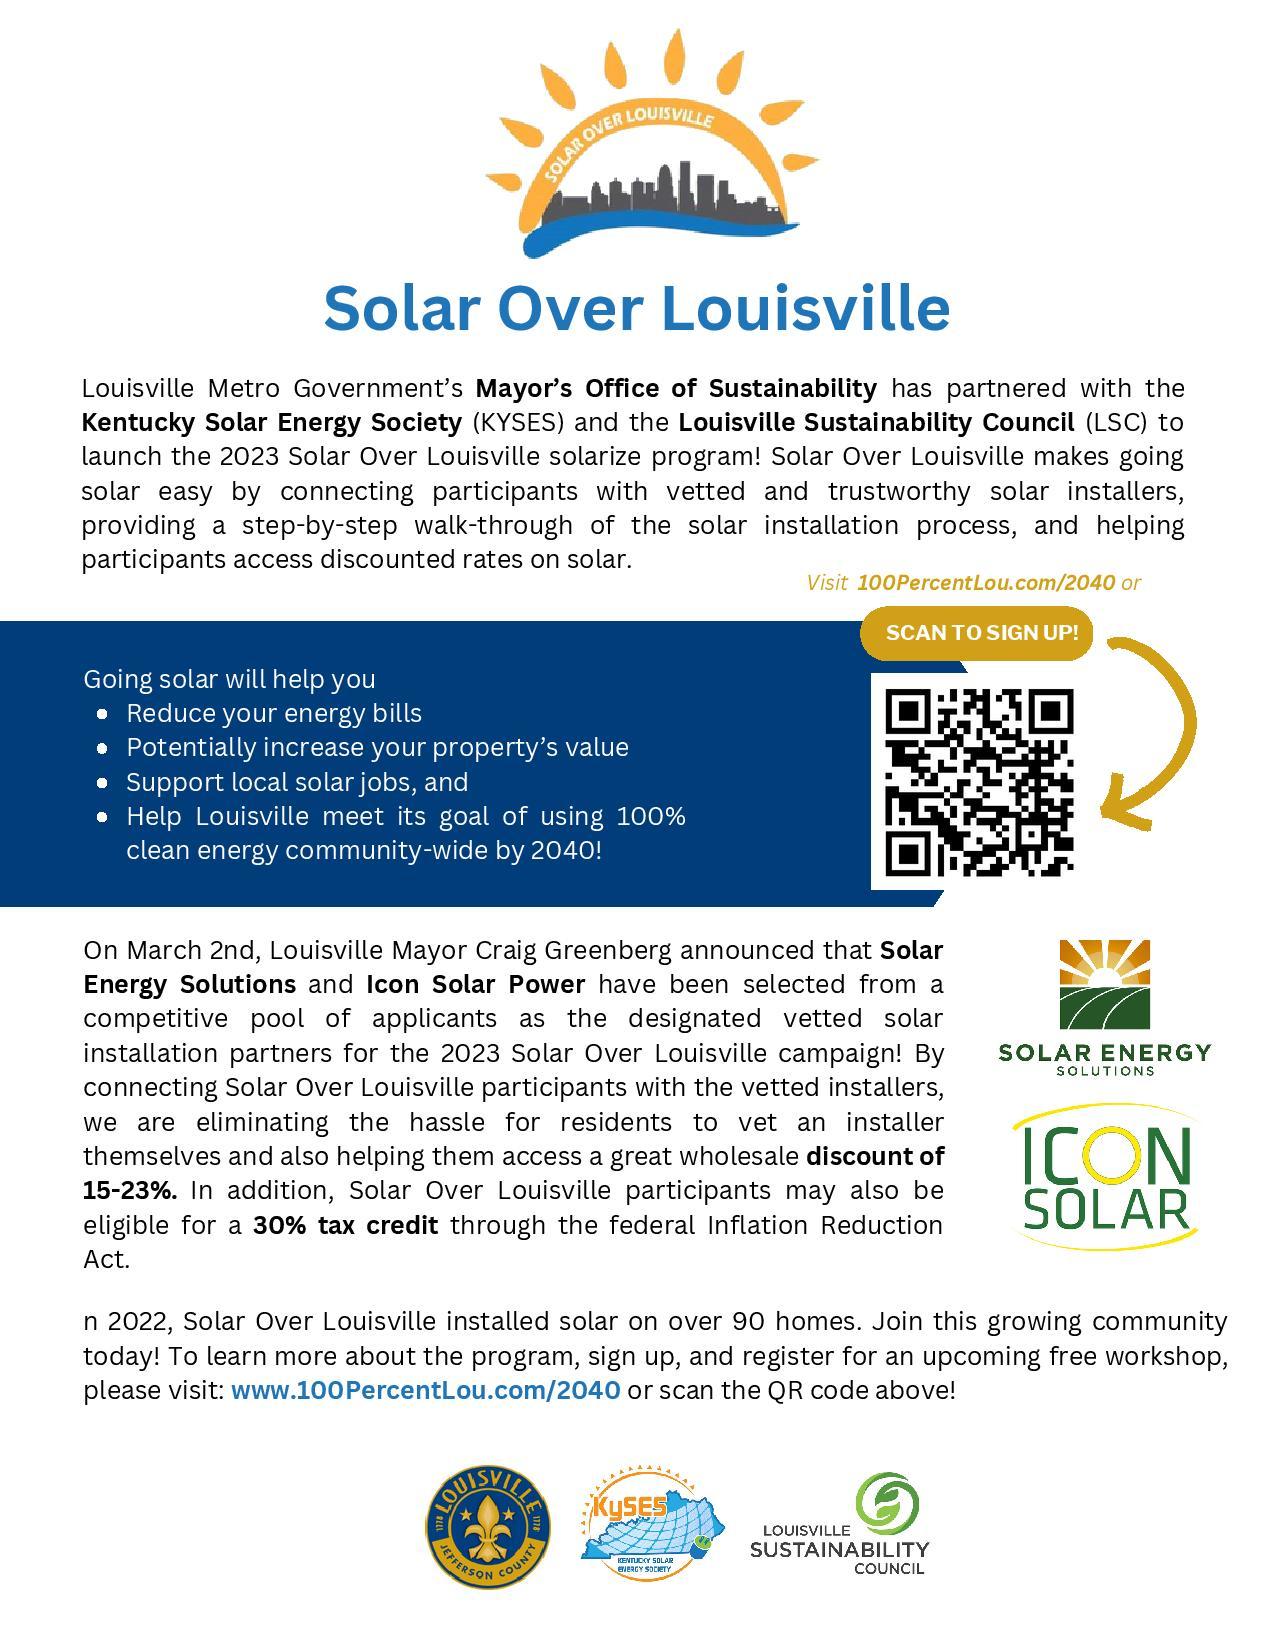 Solar over Louisville 2023